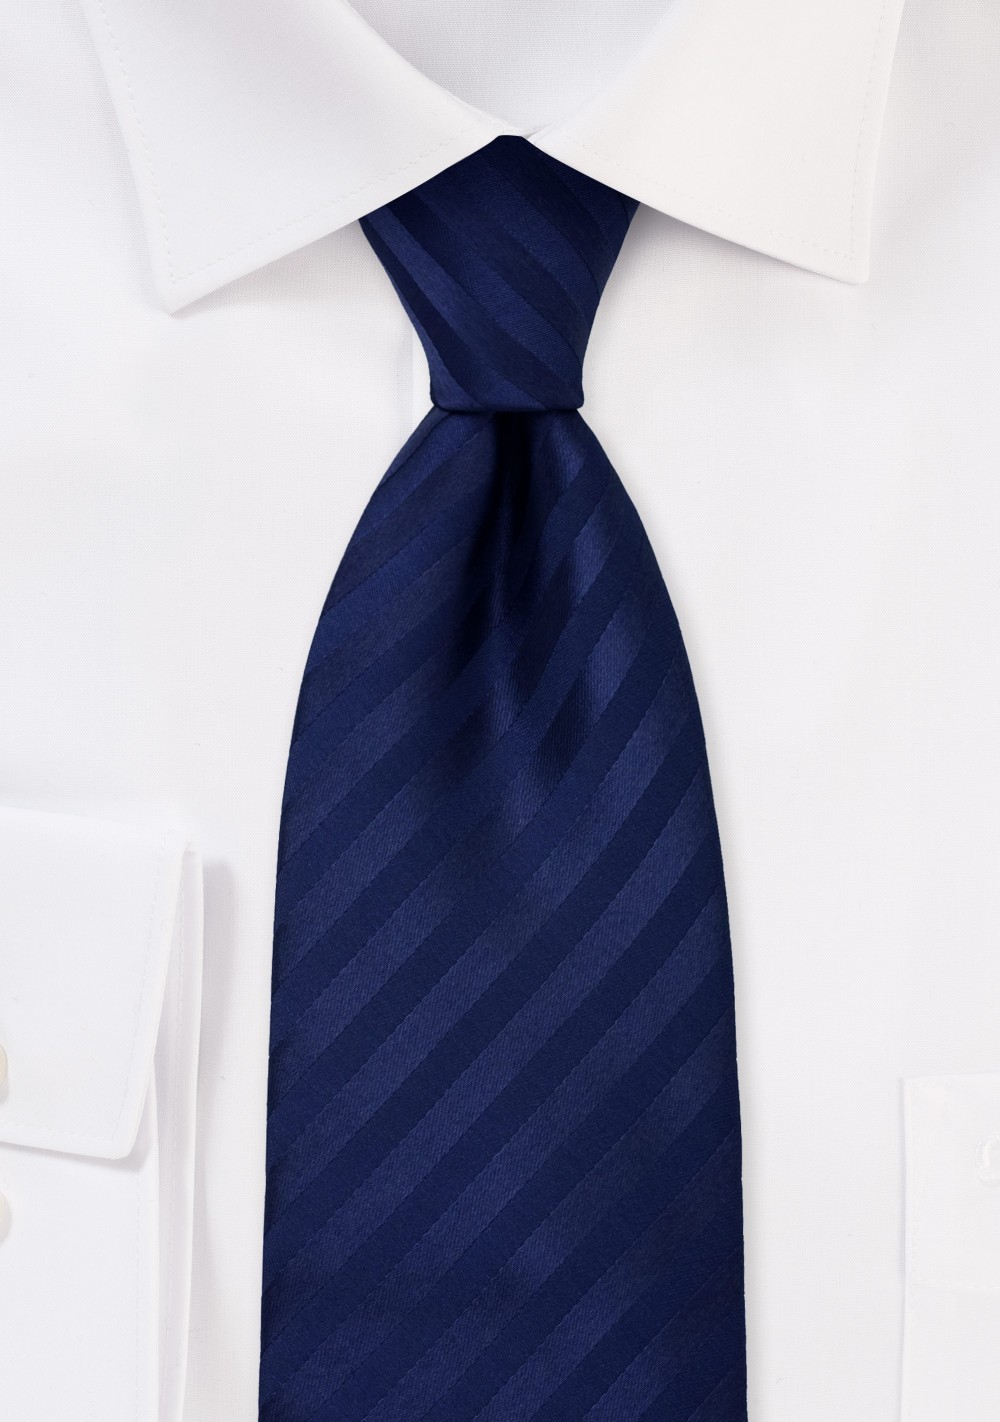 Solid color men's ties - Stain resistant dark blue tie | Cheap-Neckties.com